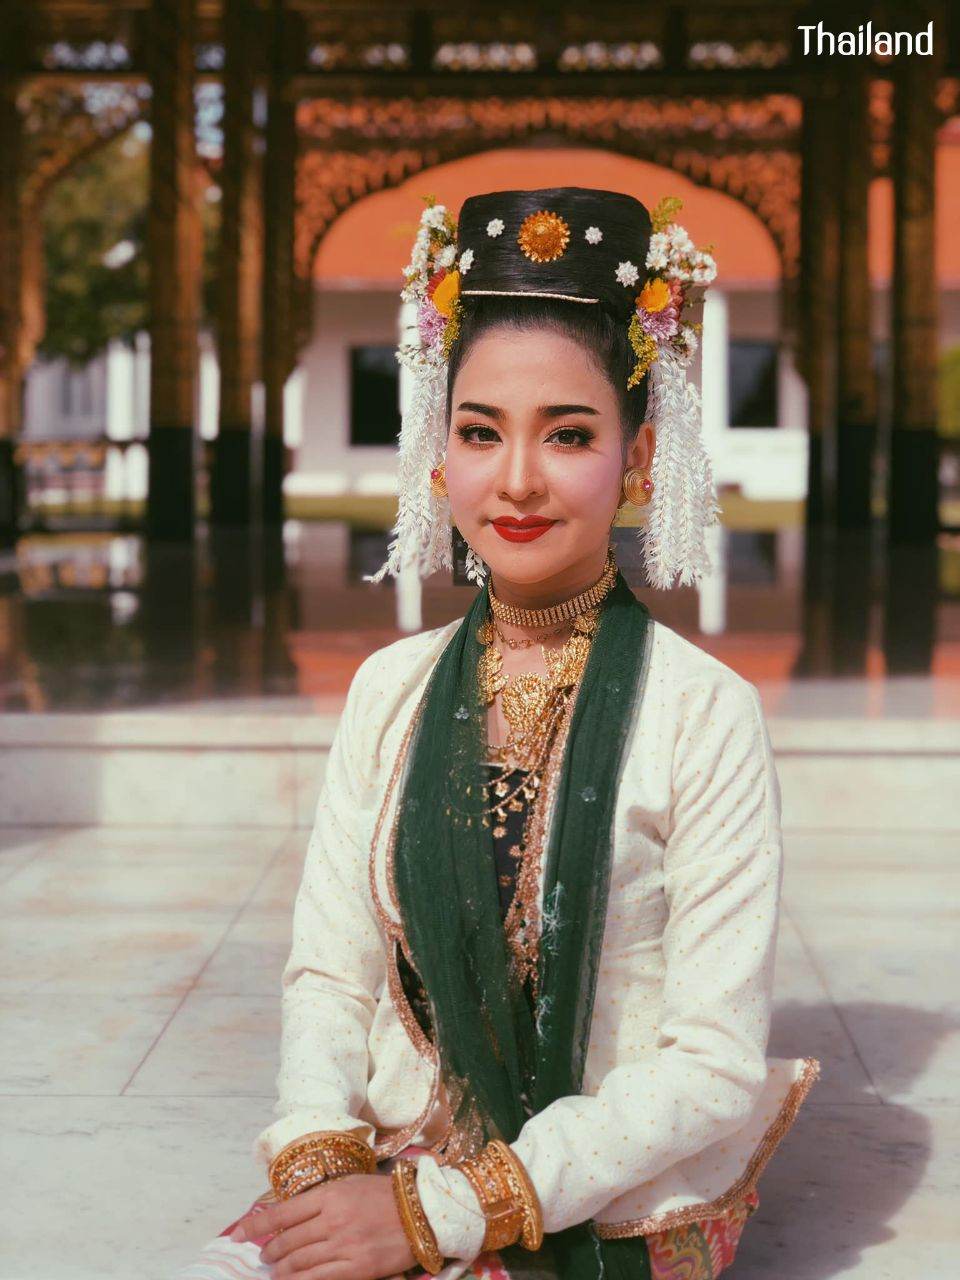 THAILAND 🇹🇭 | "Man Mui Zienta Dance" or "Fon Man Mui Chiang Ta": The Influence of Burmese Dramatic Art in Thai Lanna performance.